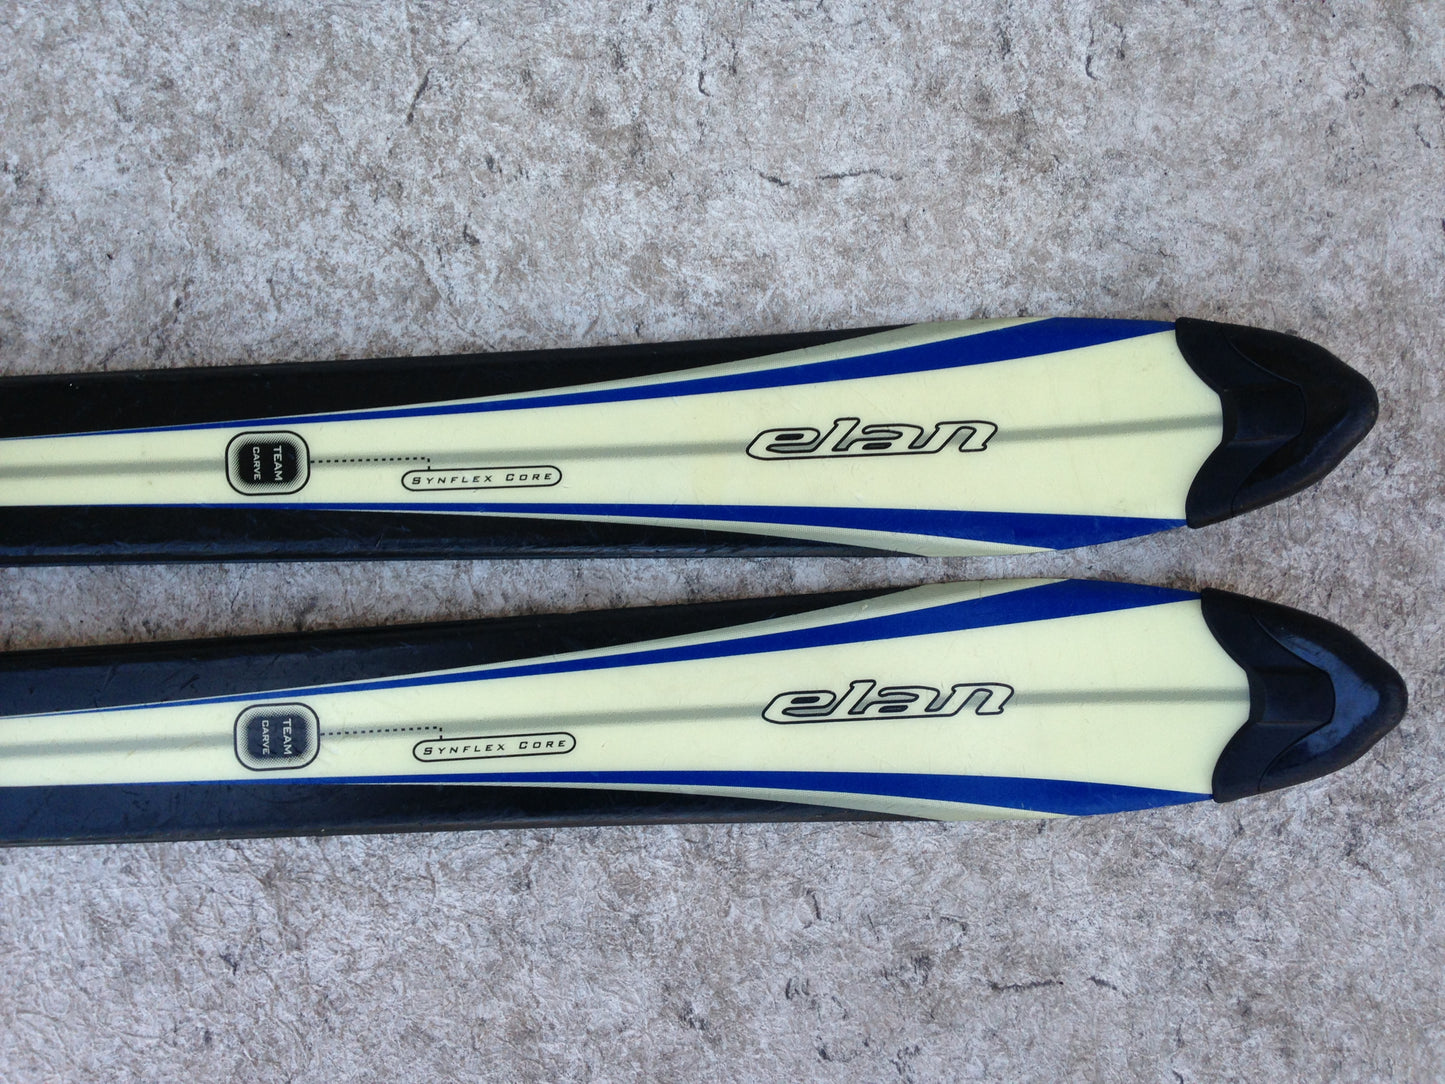 Ski 138 Elan Black Cream Blue With Bindings Fit Adult Size 9-10 Shoe